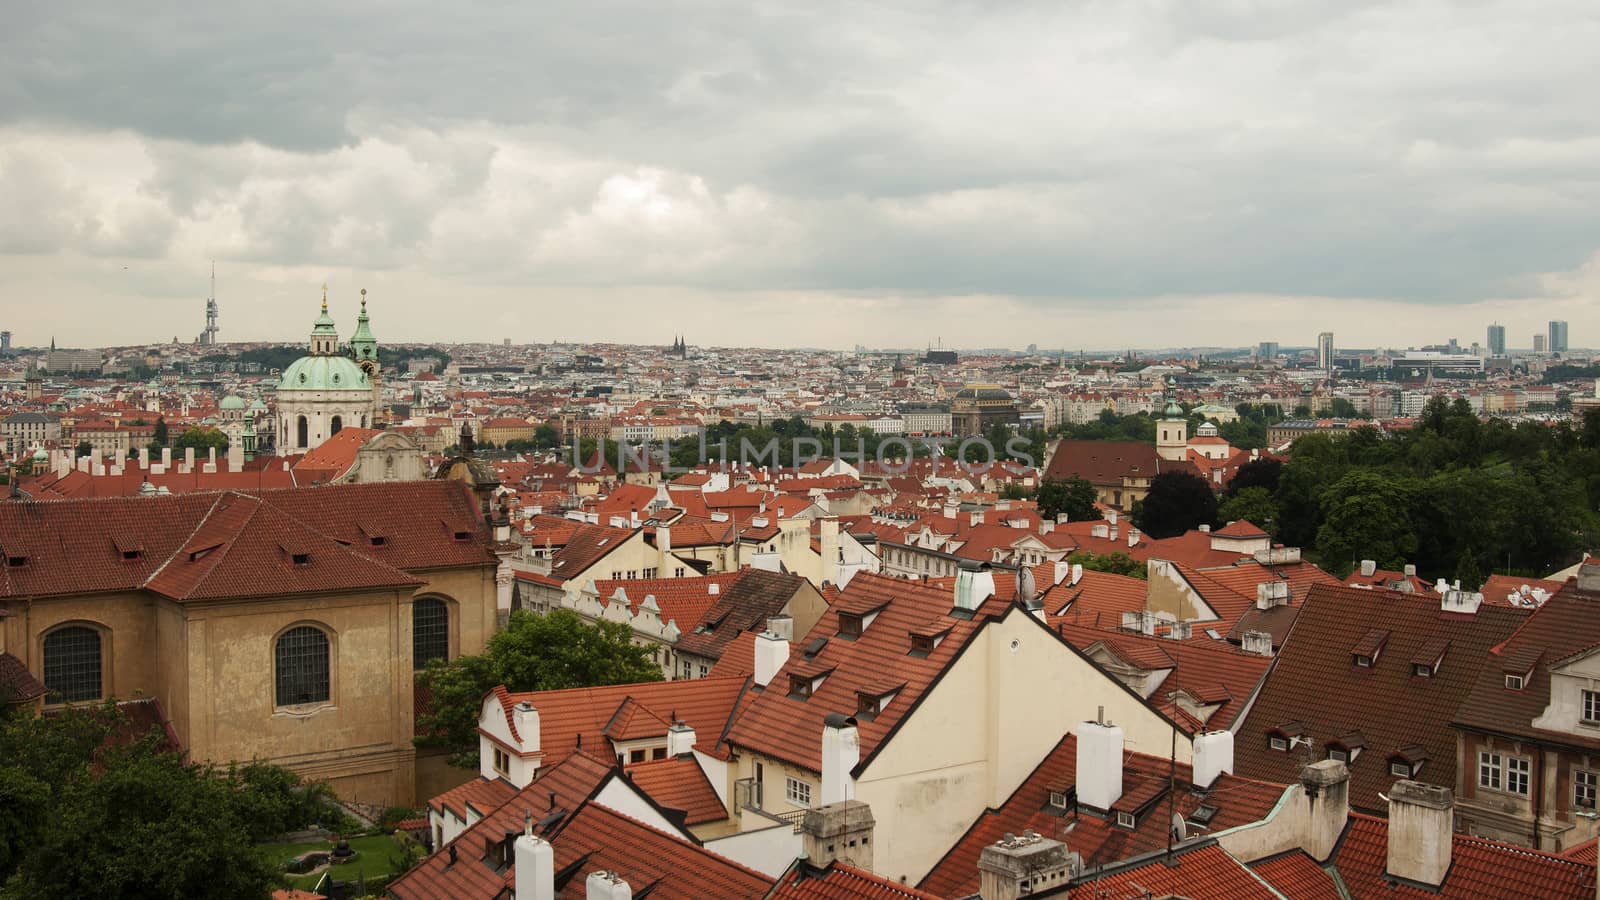 The historical capital of Bohemia proper.